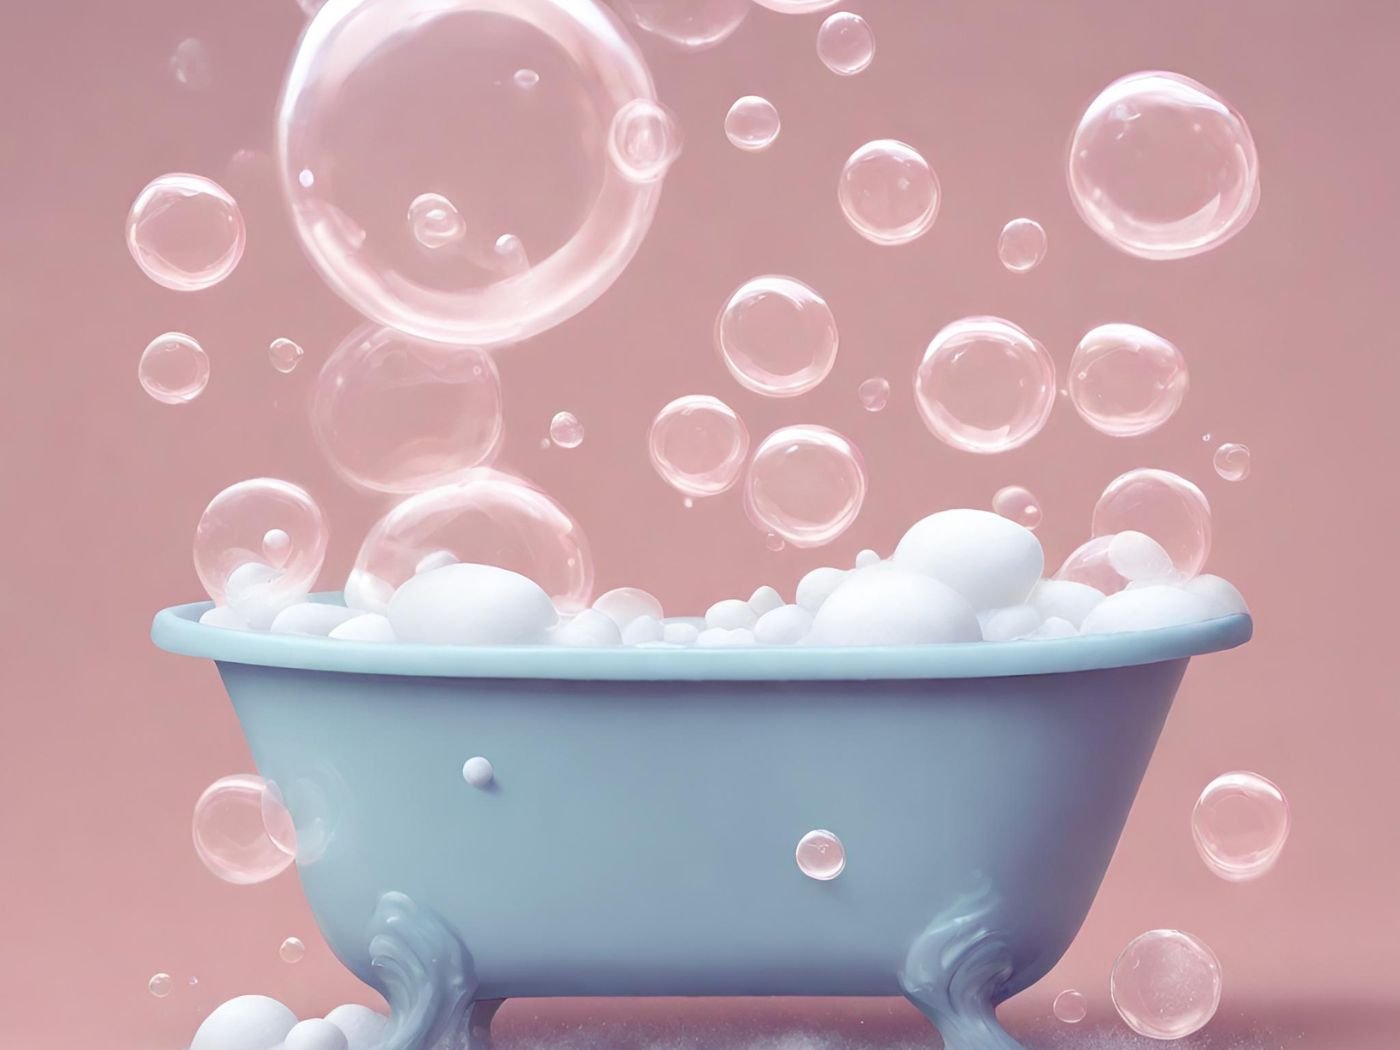 https://s.calendarr.com/upload/d6/a9/national-bubble-bath-day-f.jpg